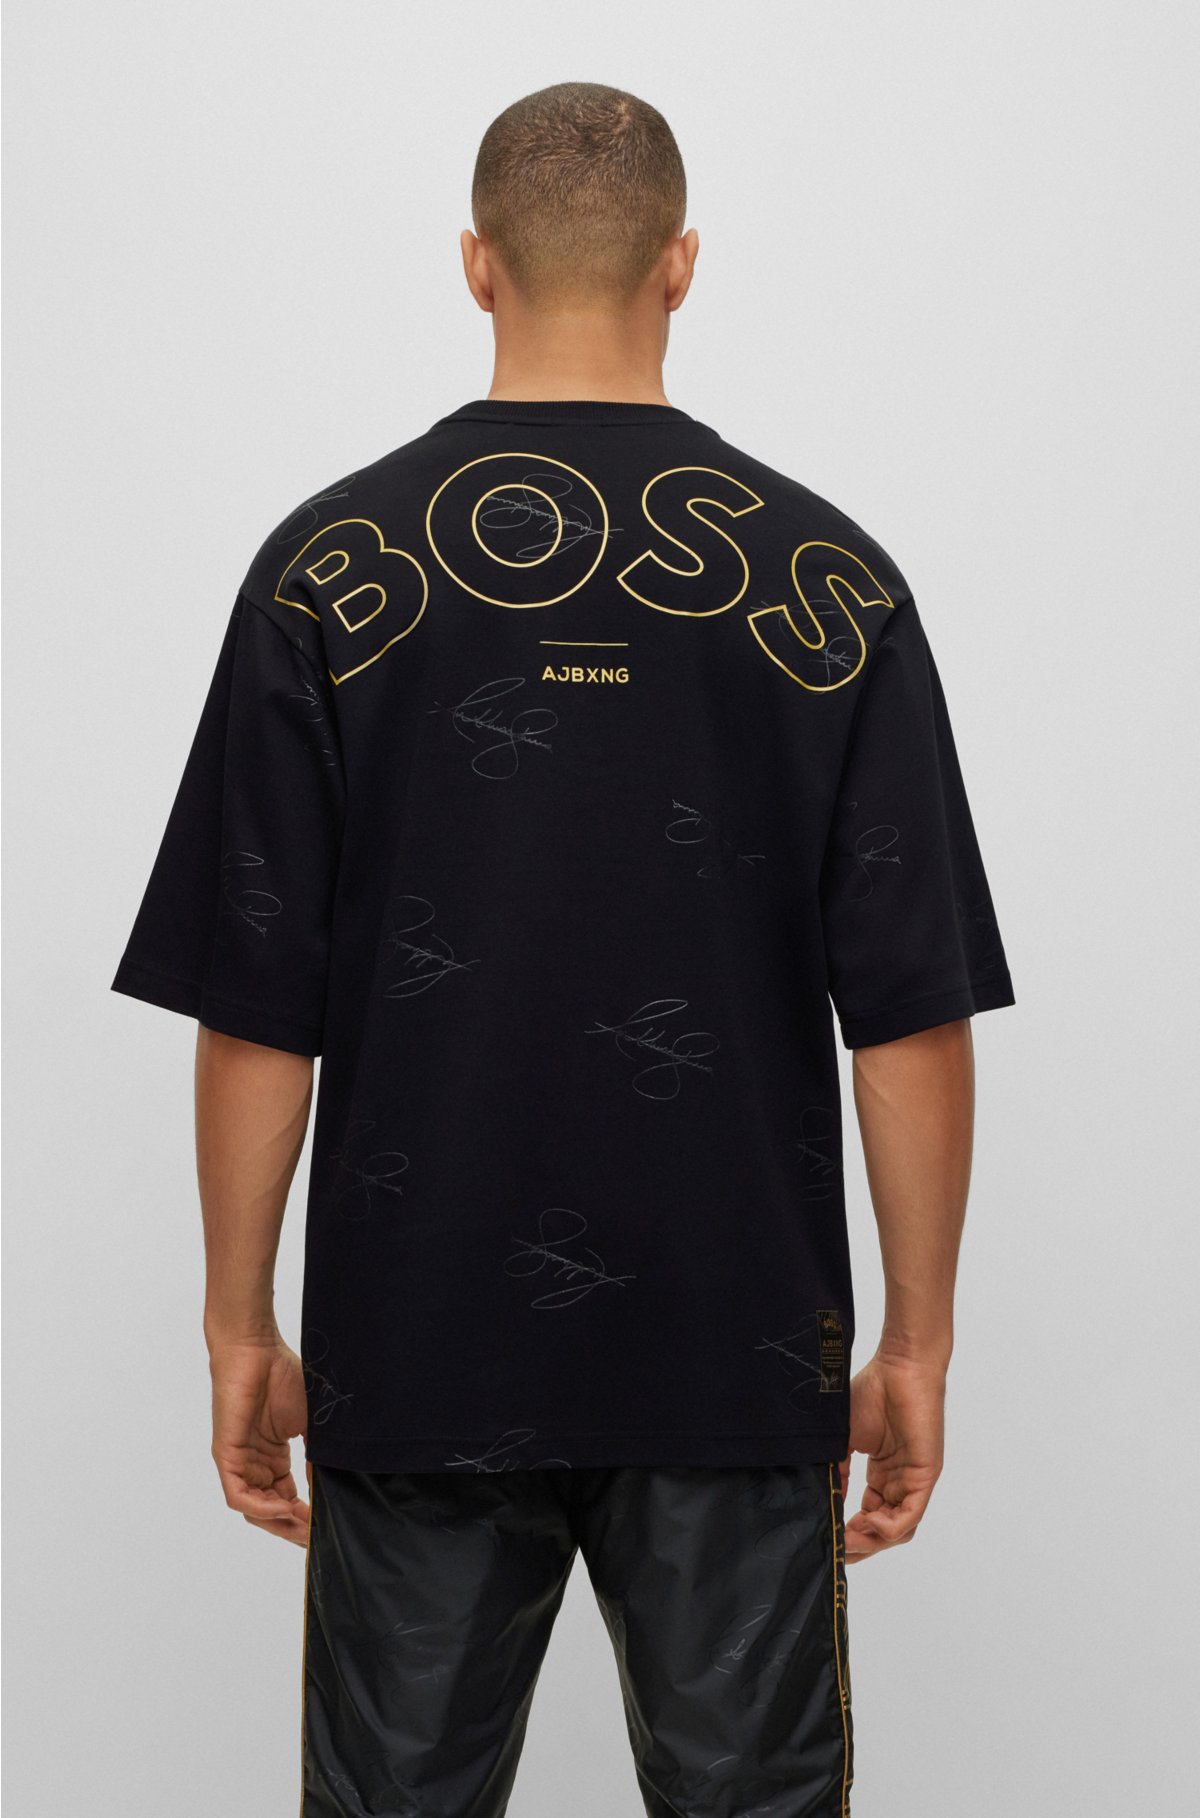 collaborative branding - with T-shirt x BOSS AJBXNG interlock-cotton signatures and BOSS